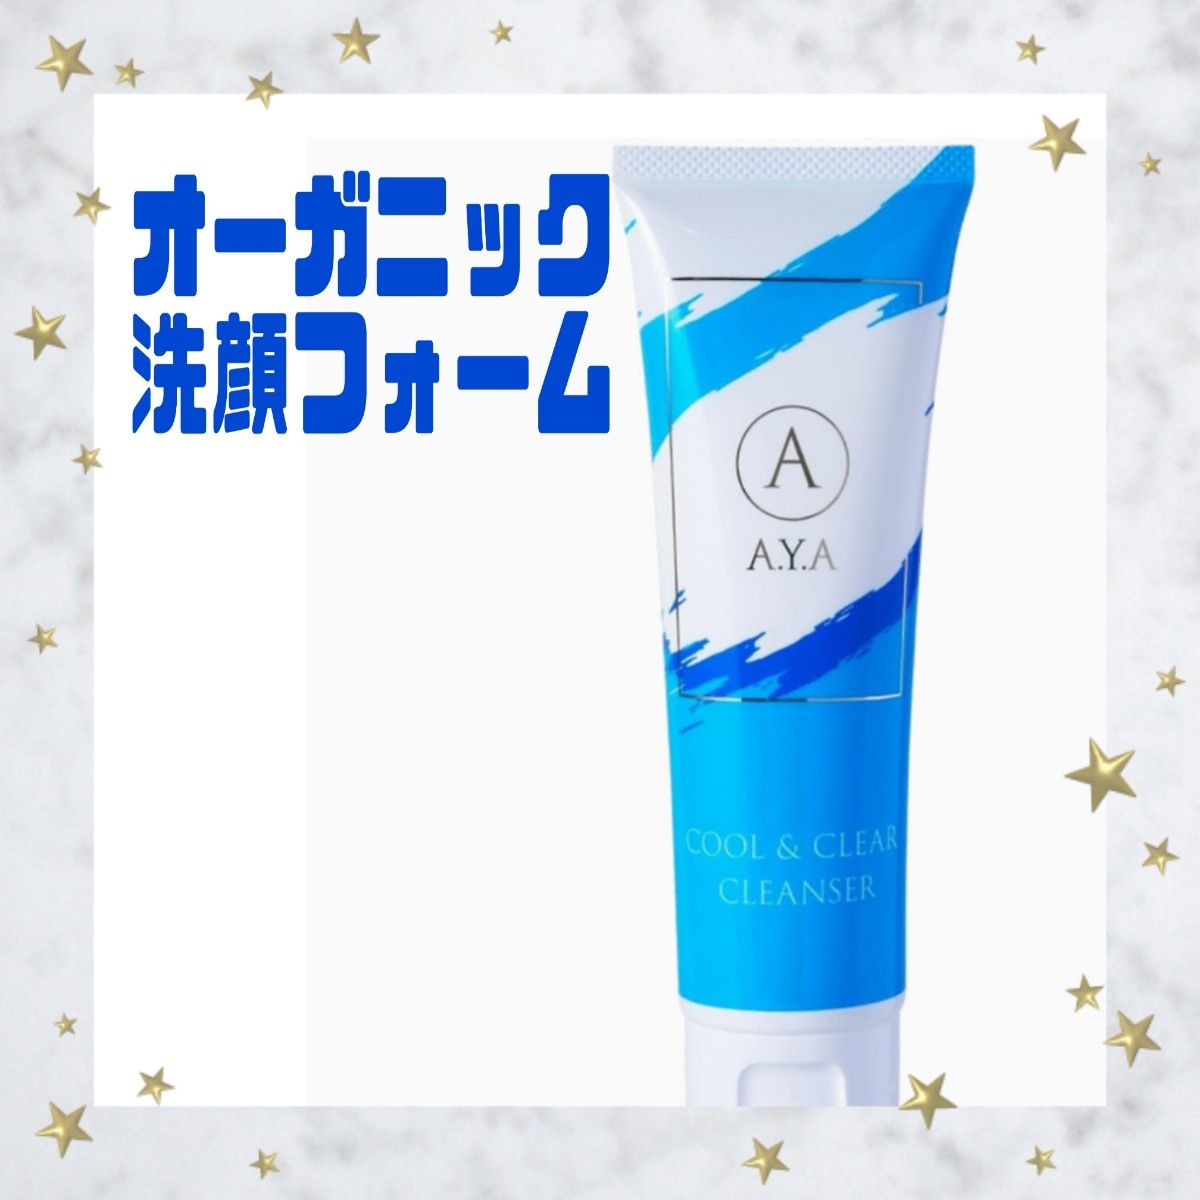 A.Y.A洗顔フォーム 日本製 無添加オーガニック 120g レディースメンズ コスメ スキンケア